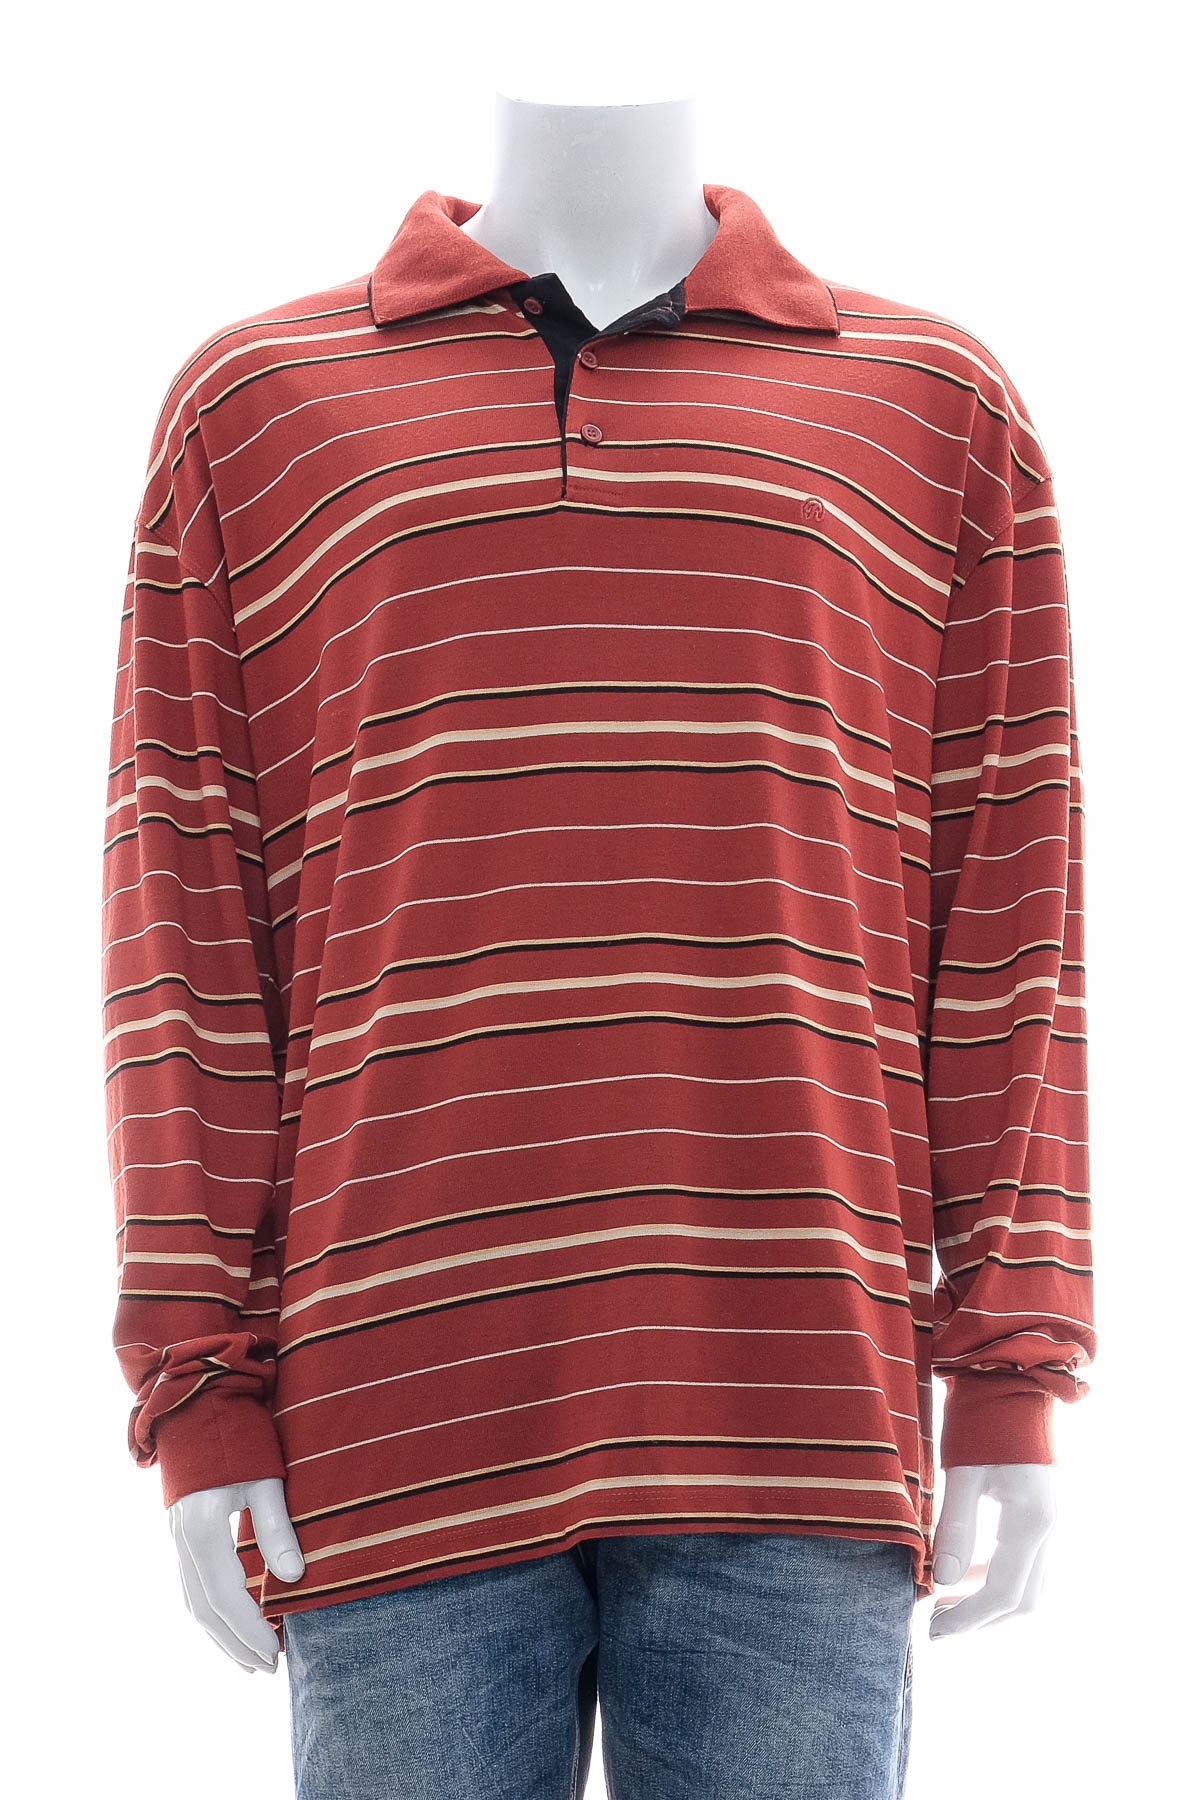 Men's sweater - Reymo - 0